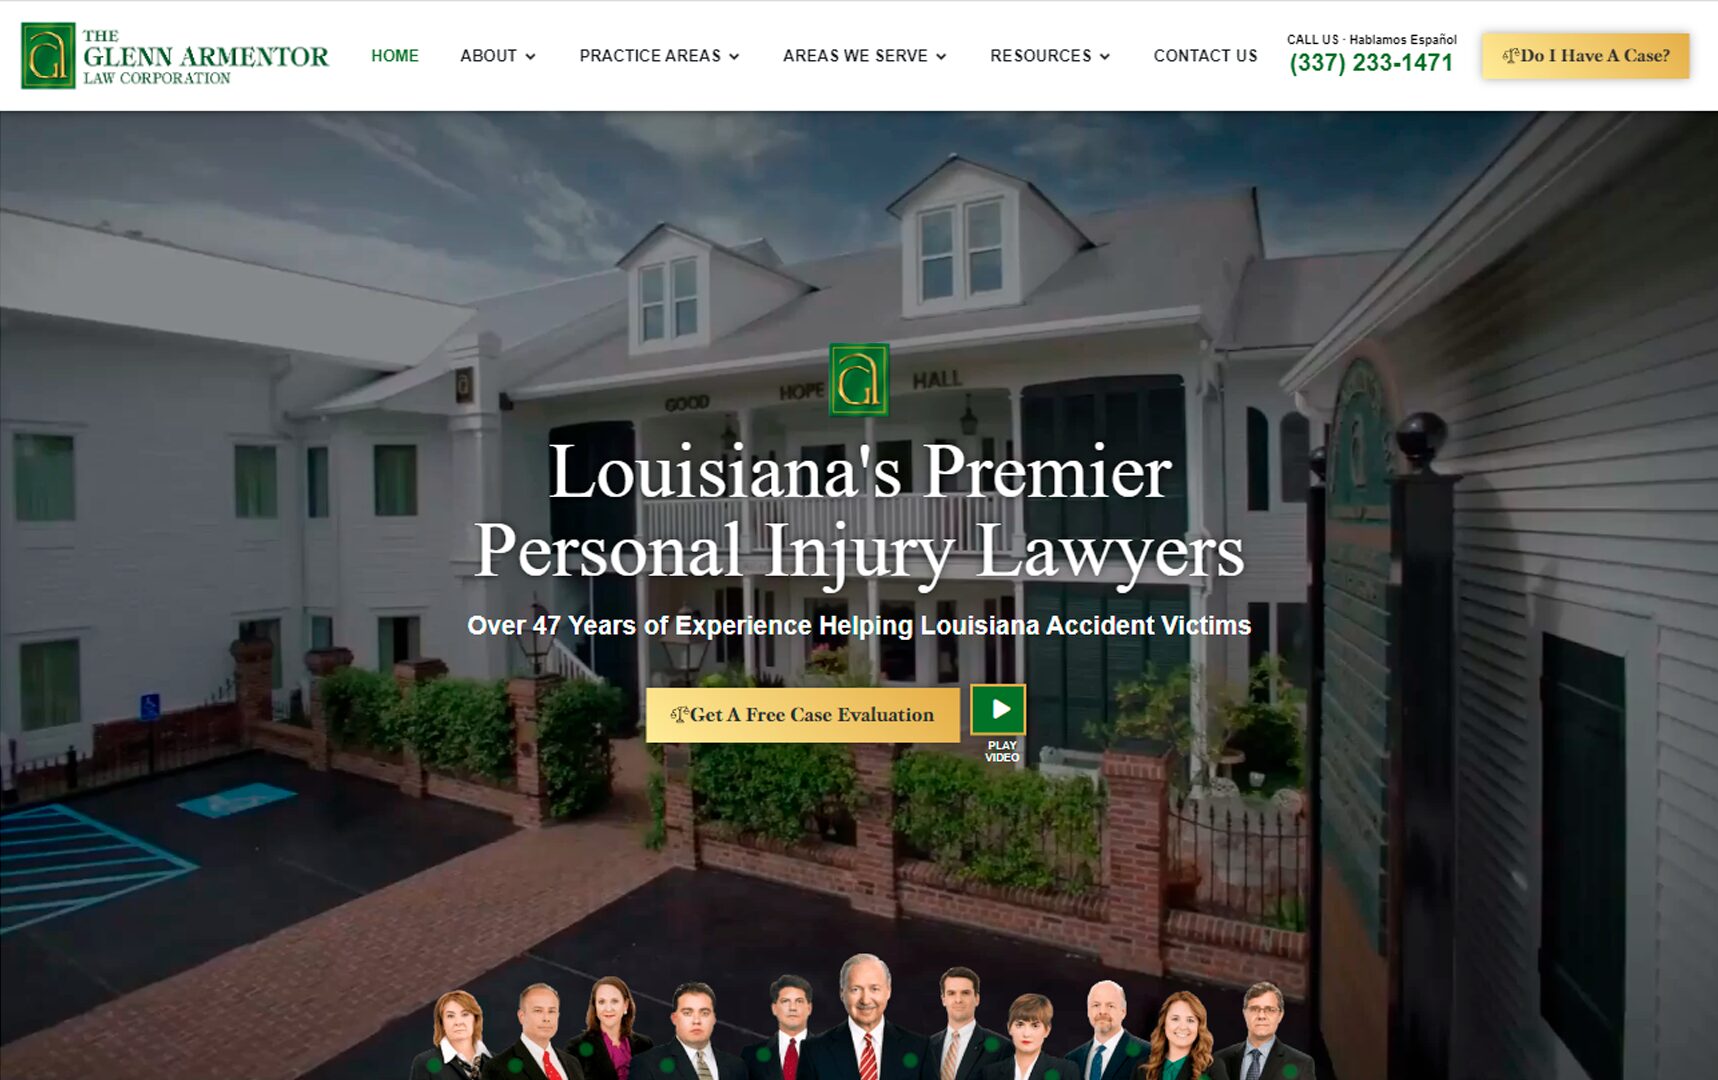 Glenn Armentor Law Corporation - Vibrandt Websites - Website Design, Lafayette LA